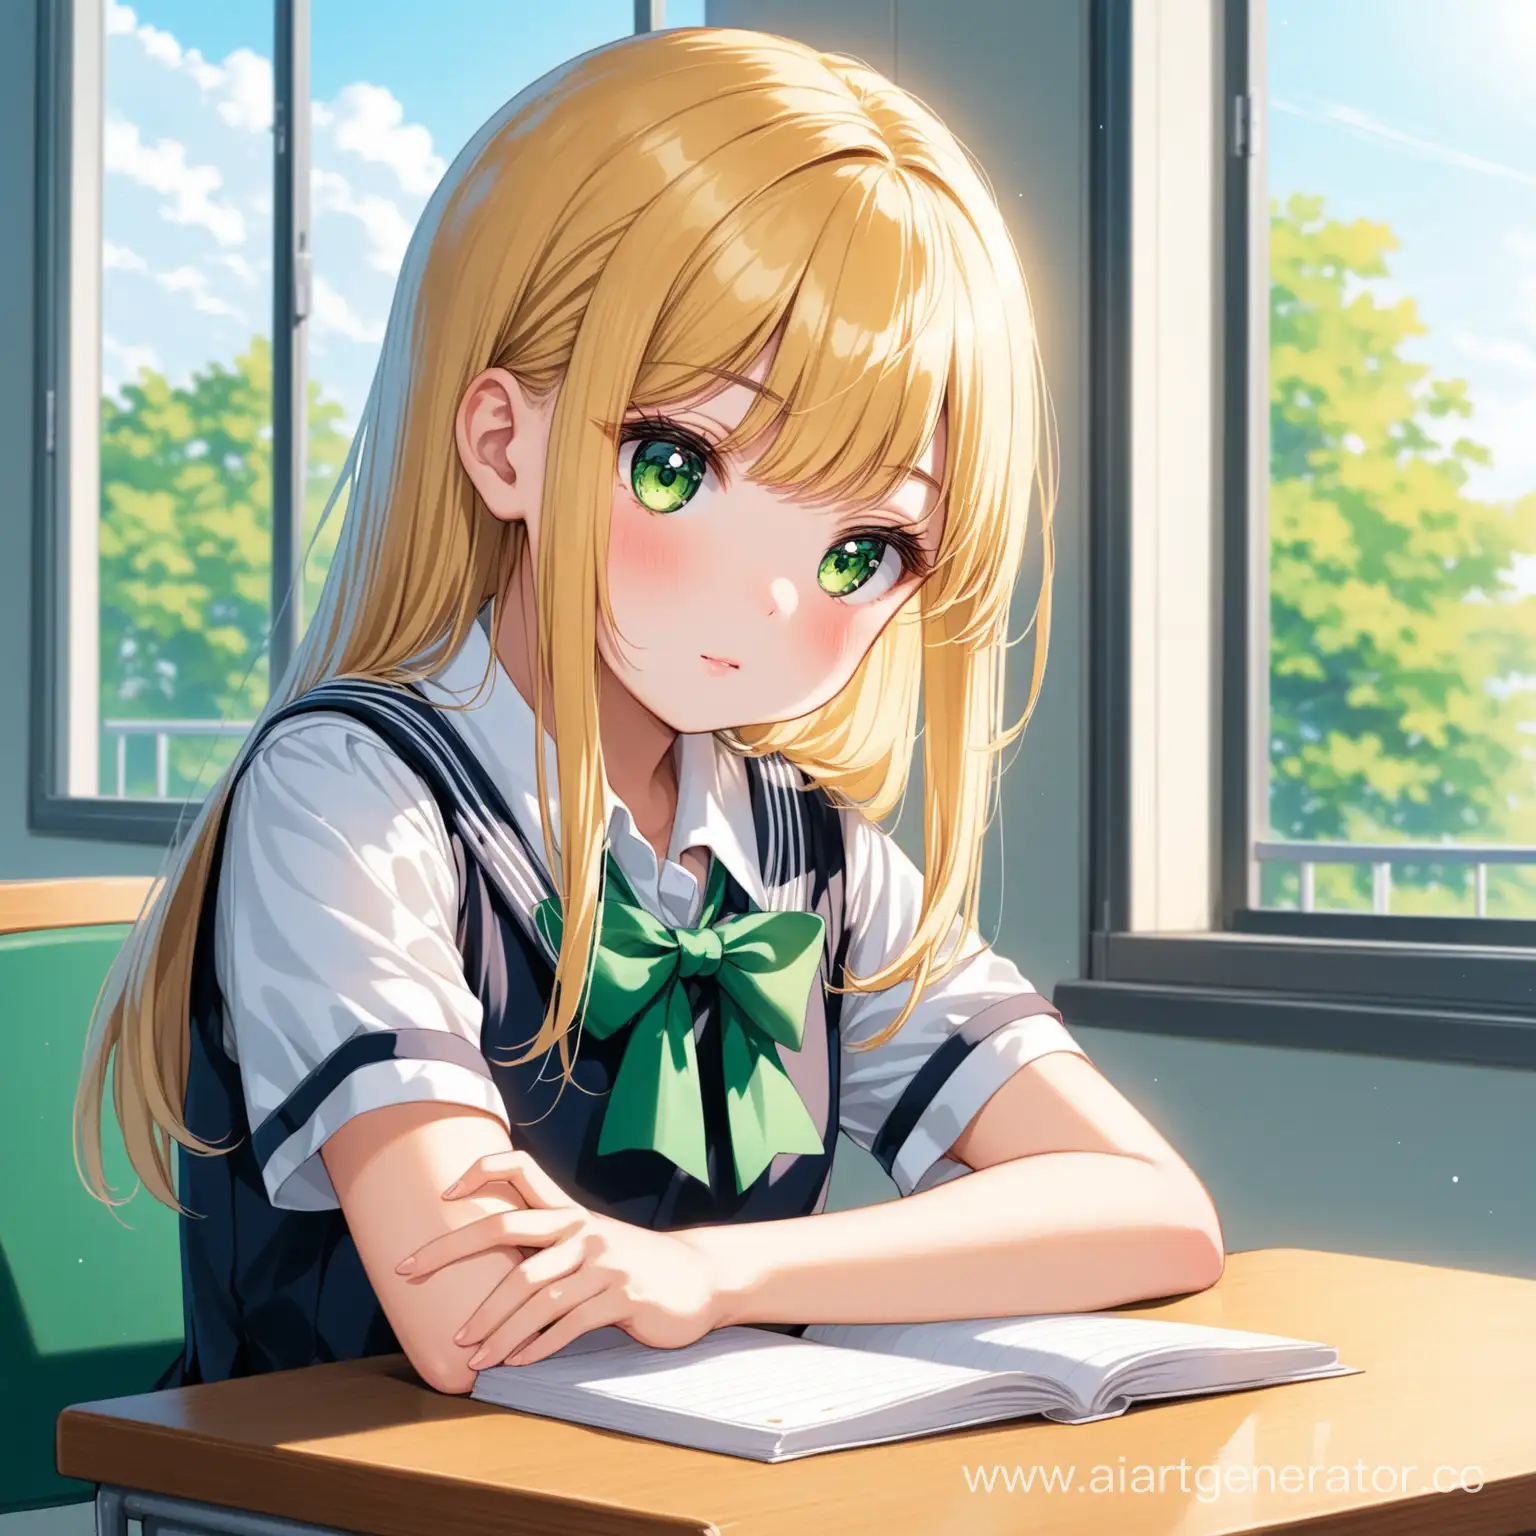 Adorable-Schoolgirl-with-Big-Green-Eyes-in-Classroom-Scene